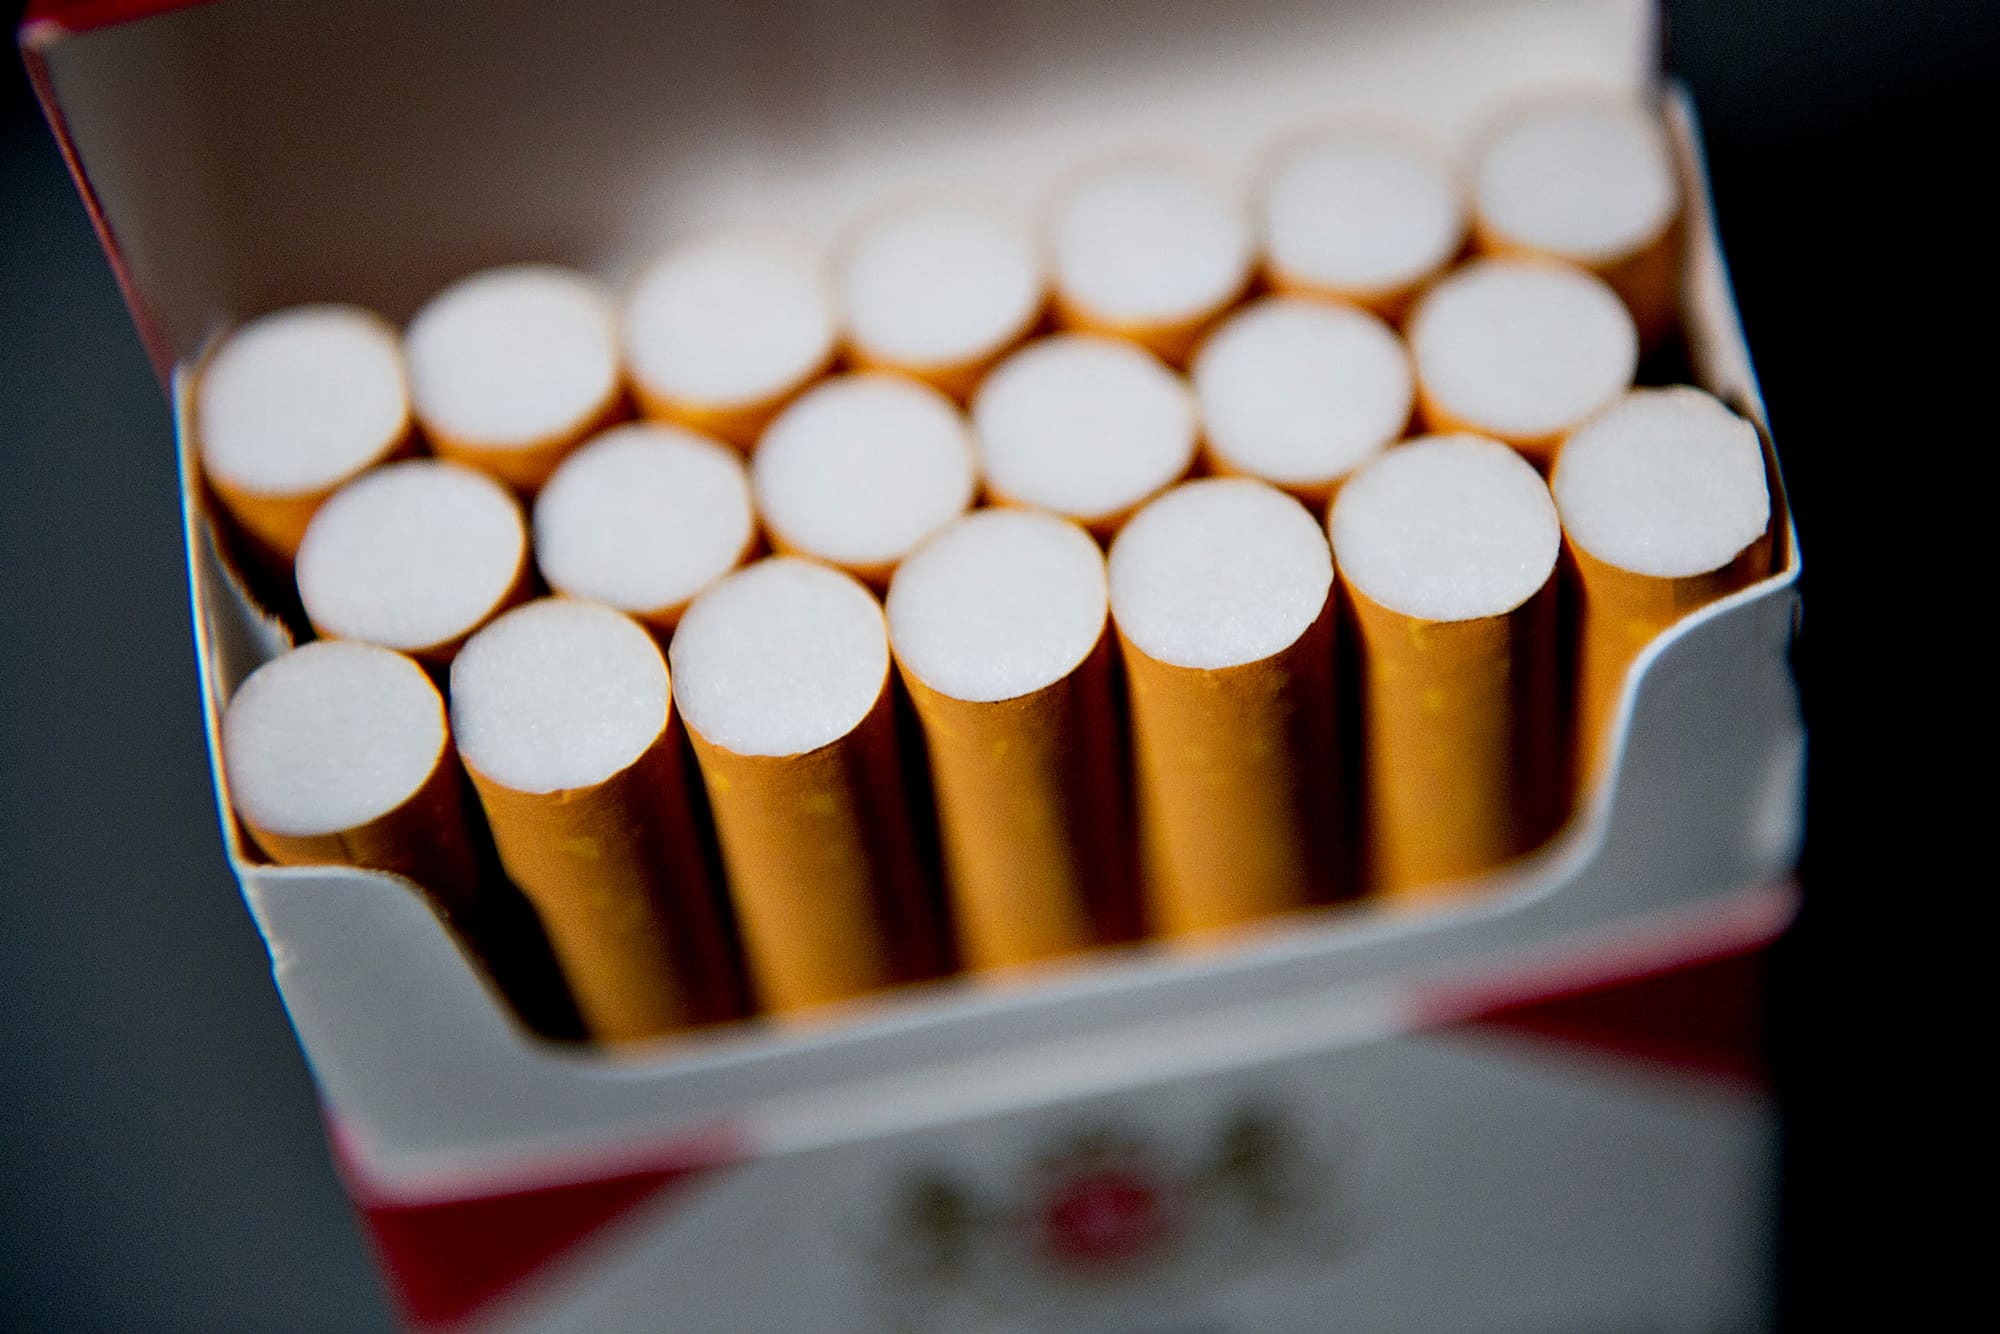 Altria said that cigarette industry shipments decreased in 2020